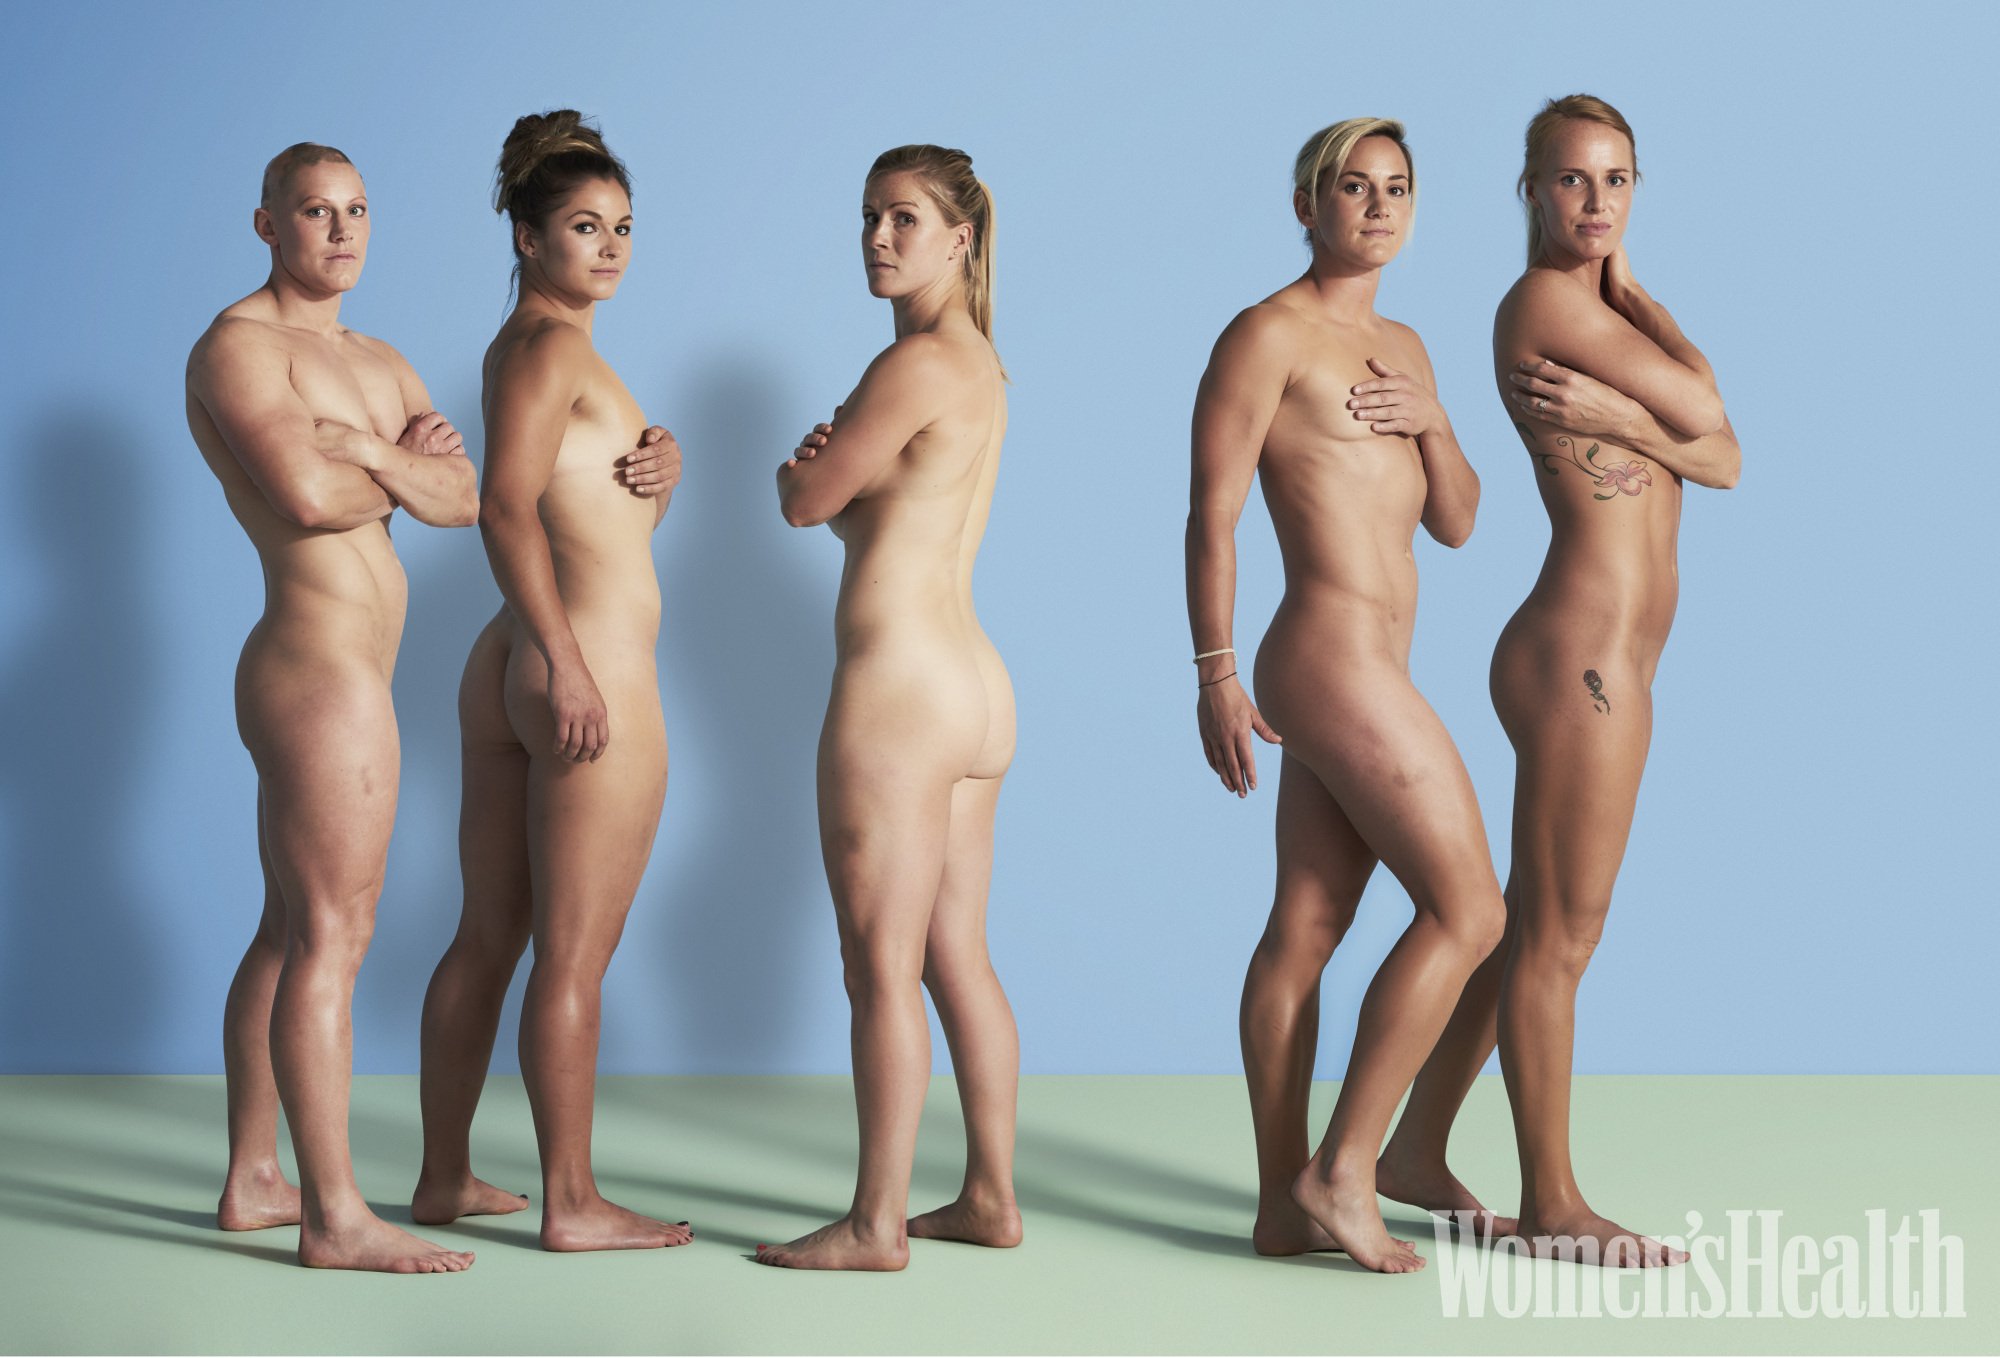 andrei turcan share best nude female athletes photos